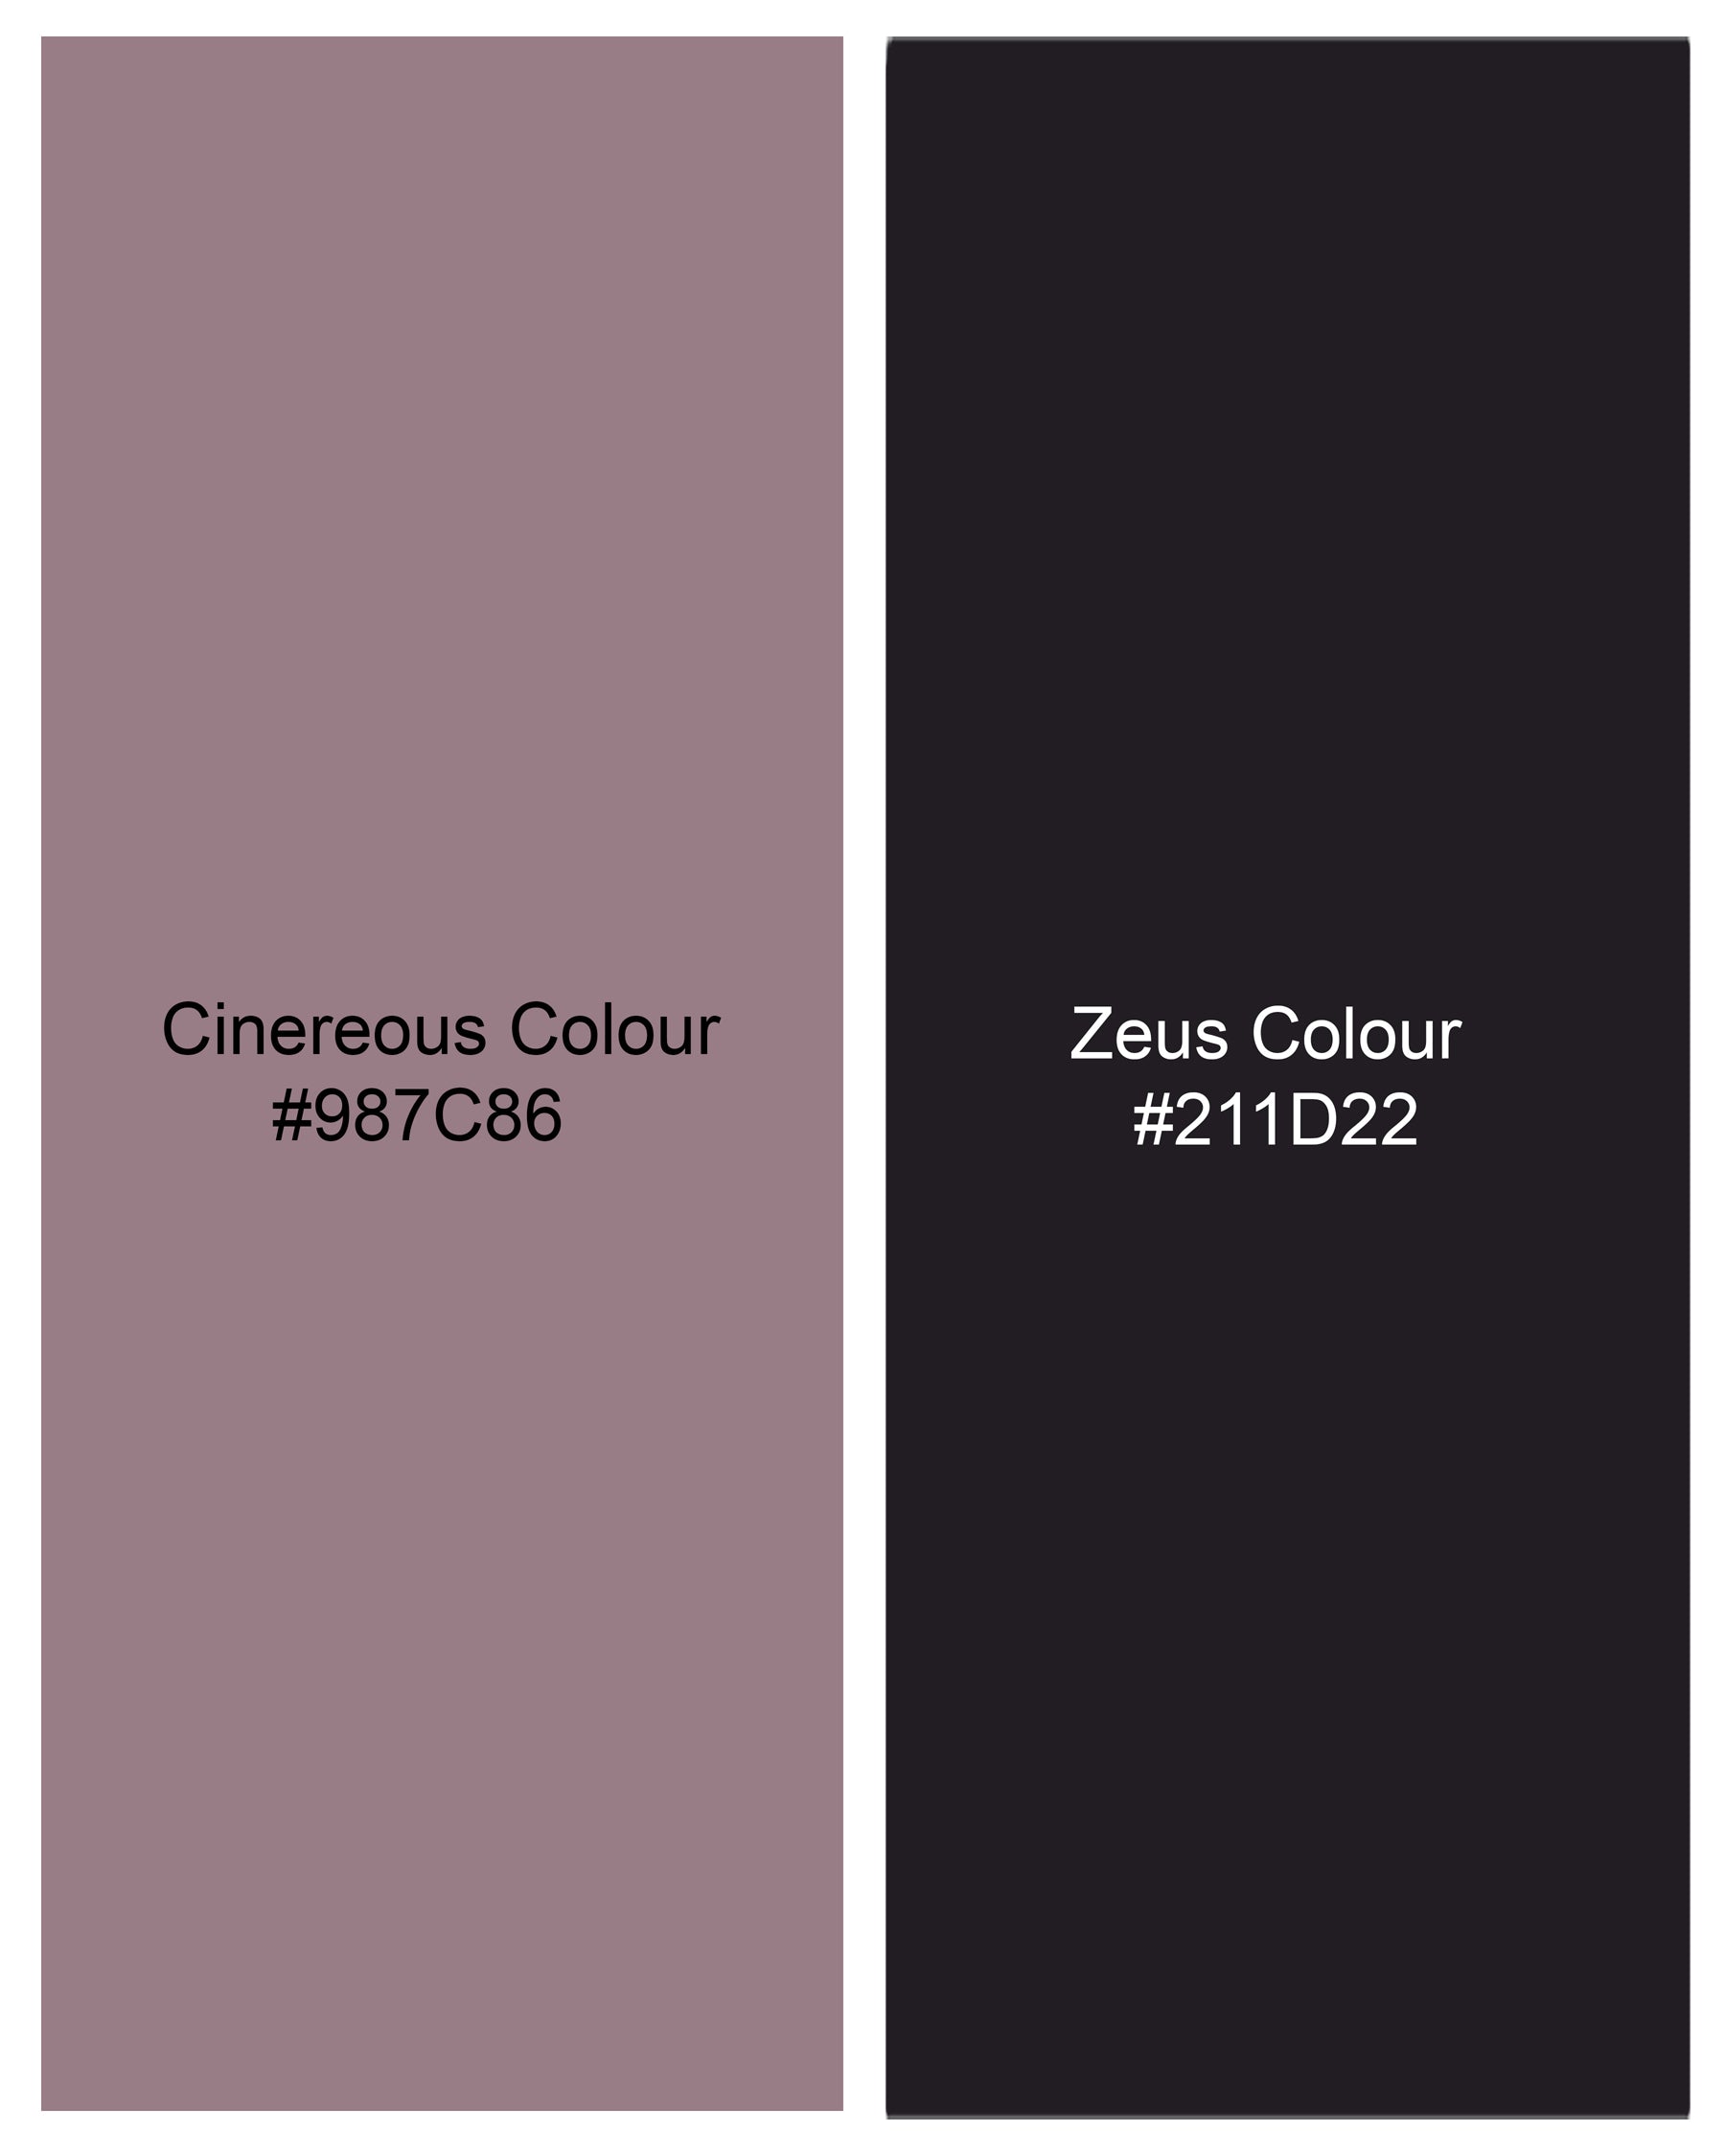 Zeus Pink printed Cross Placket Bandhgala Suit